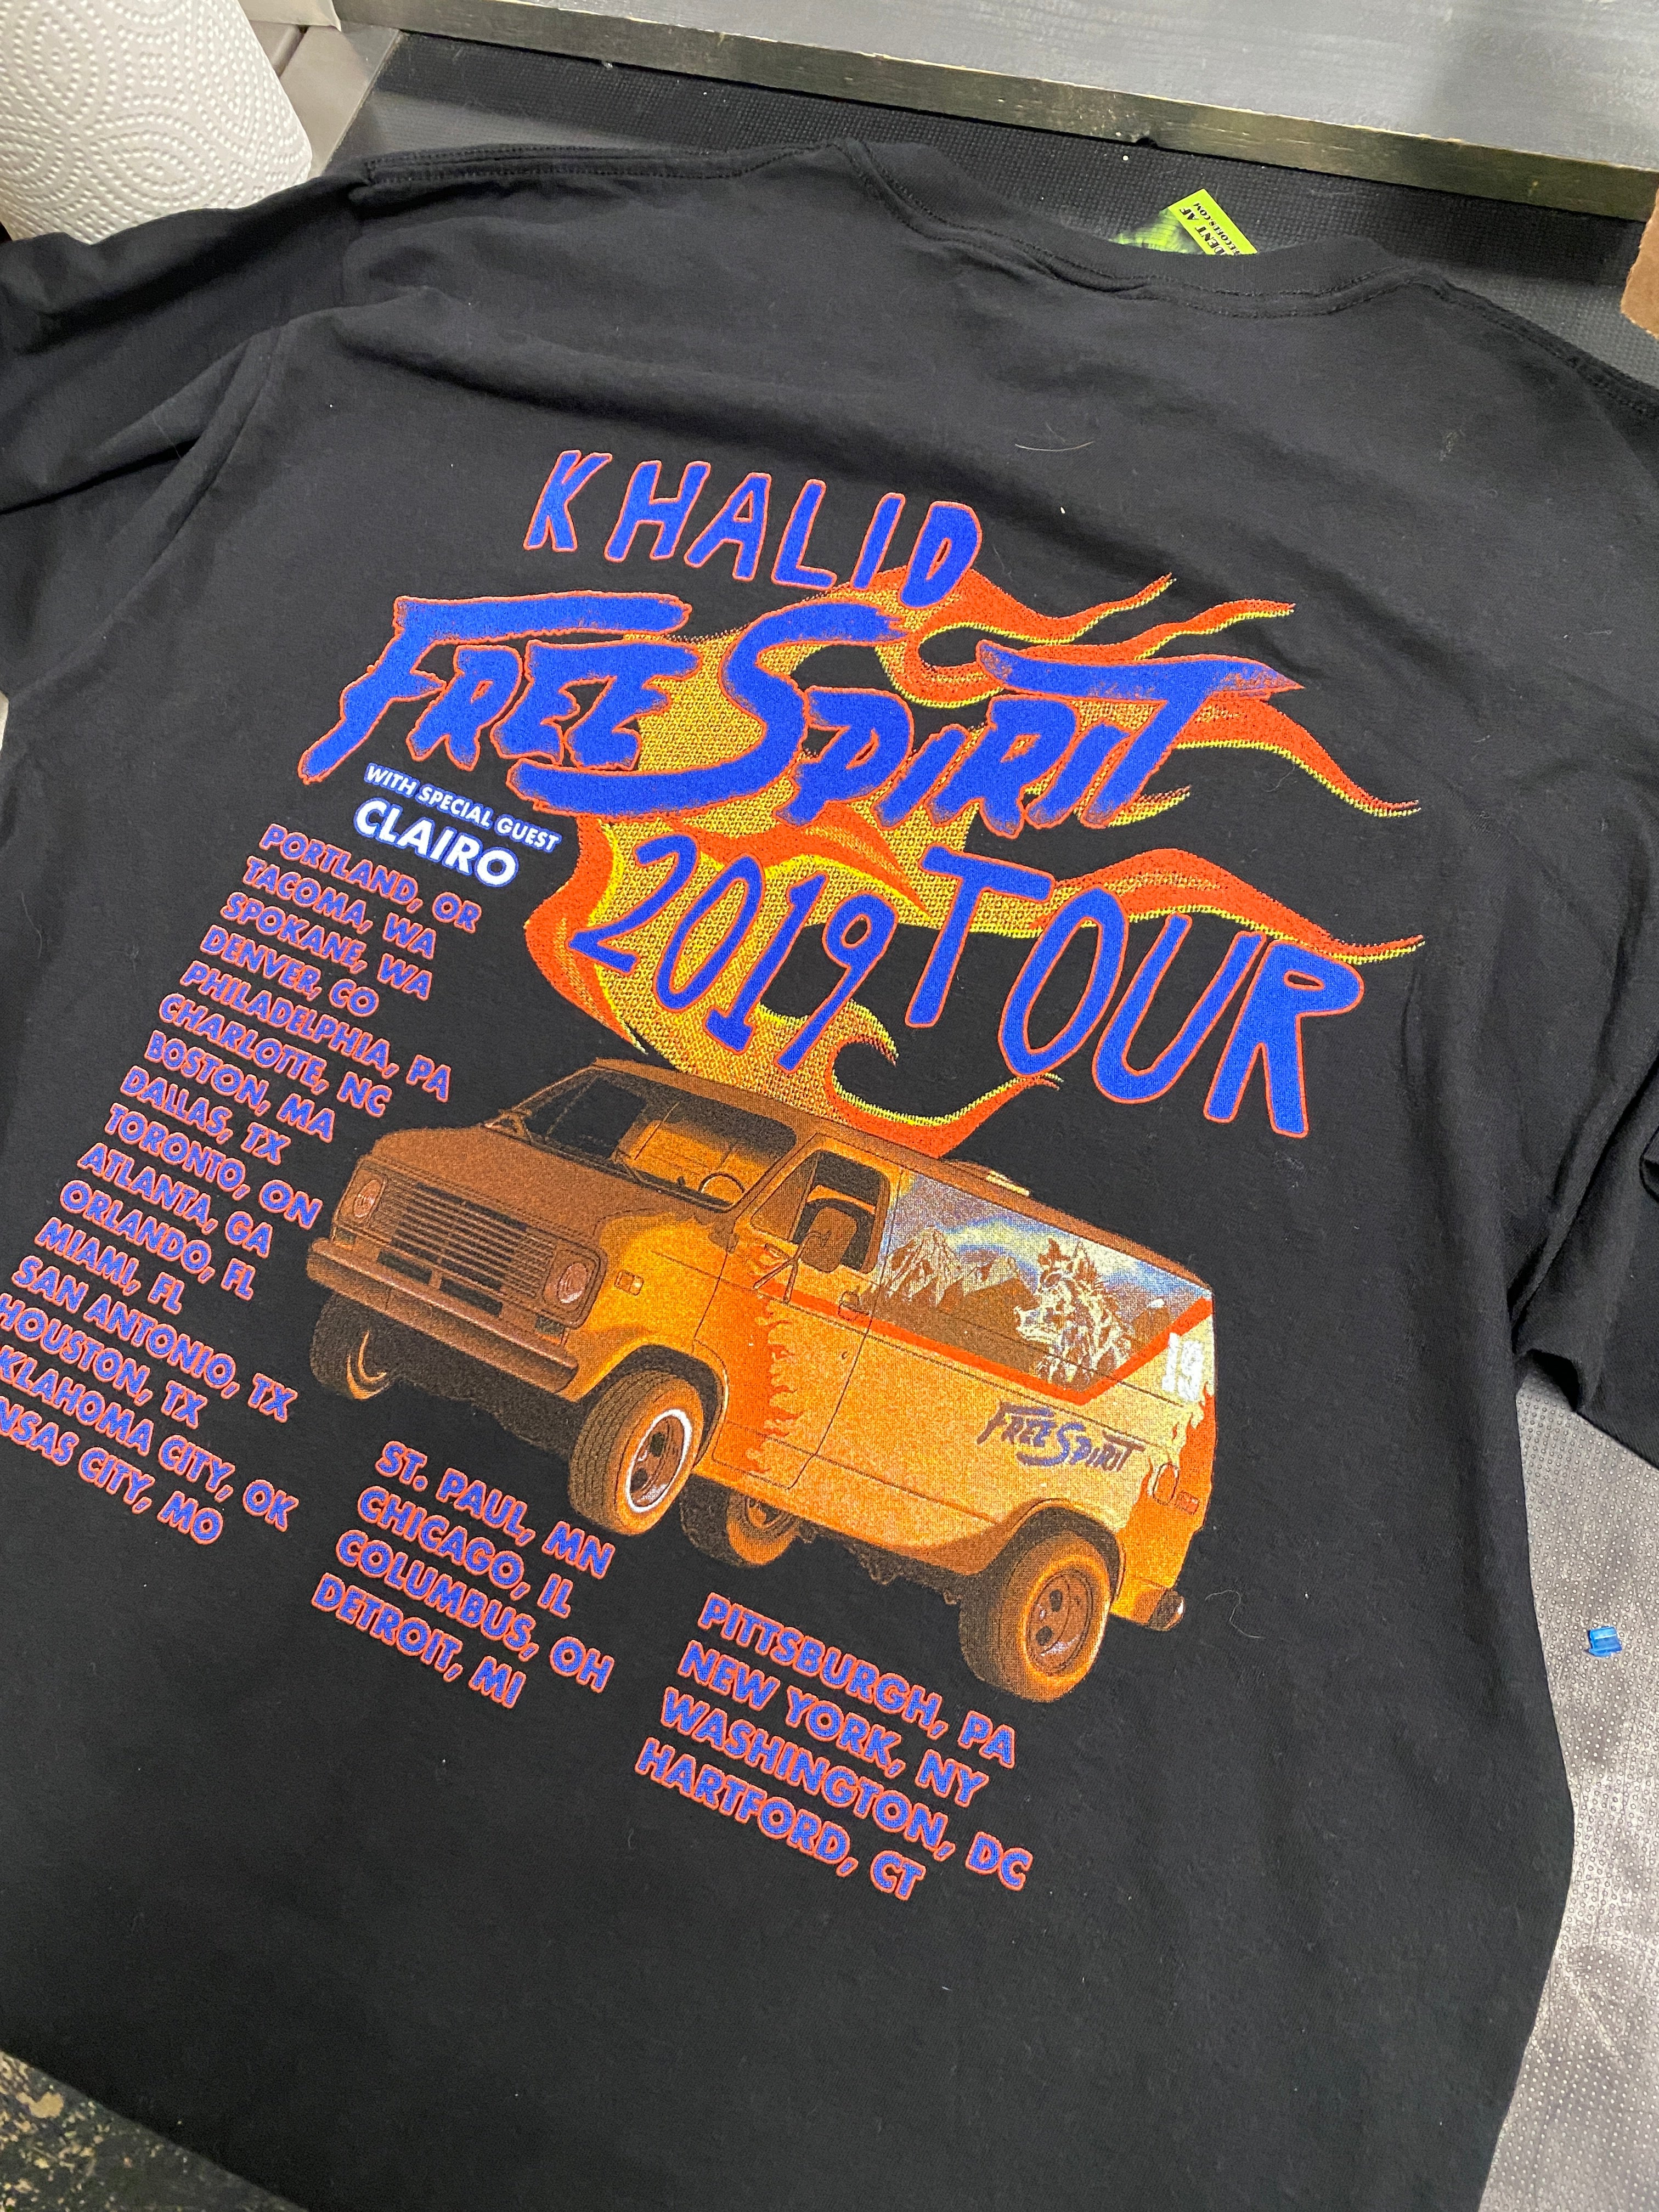 Khalid 2019 Free Spirit Tour Parking Lot Boot T-Shirt, Blk, L - Darkside Records